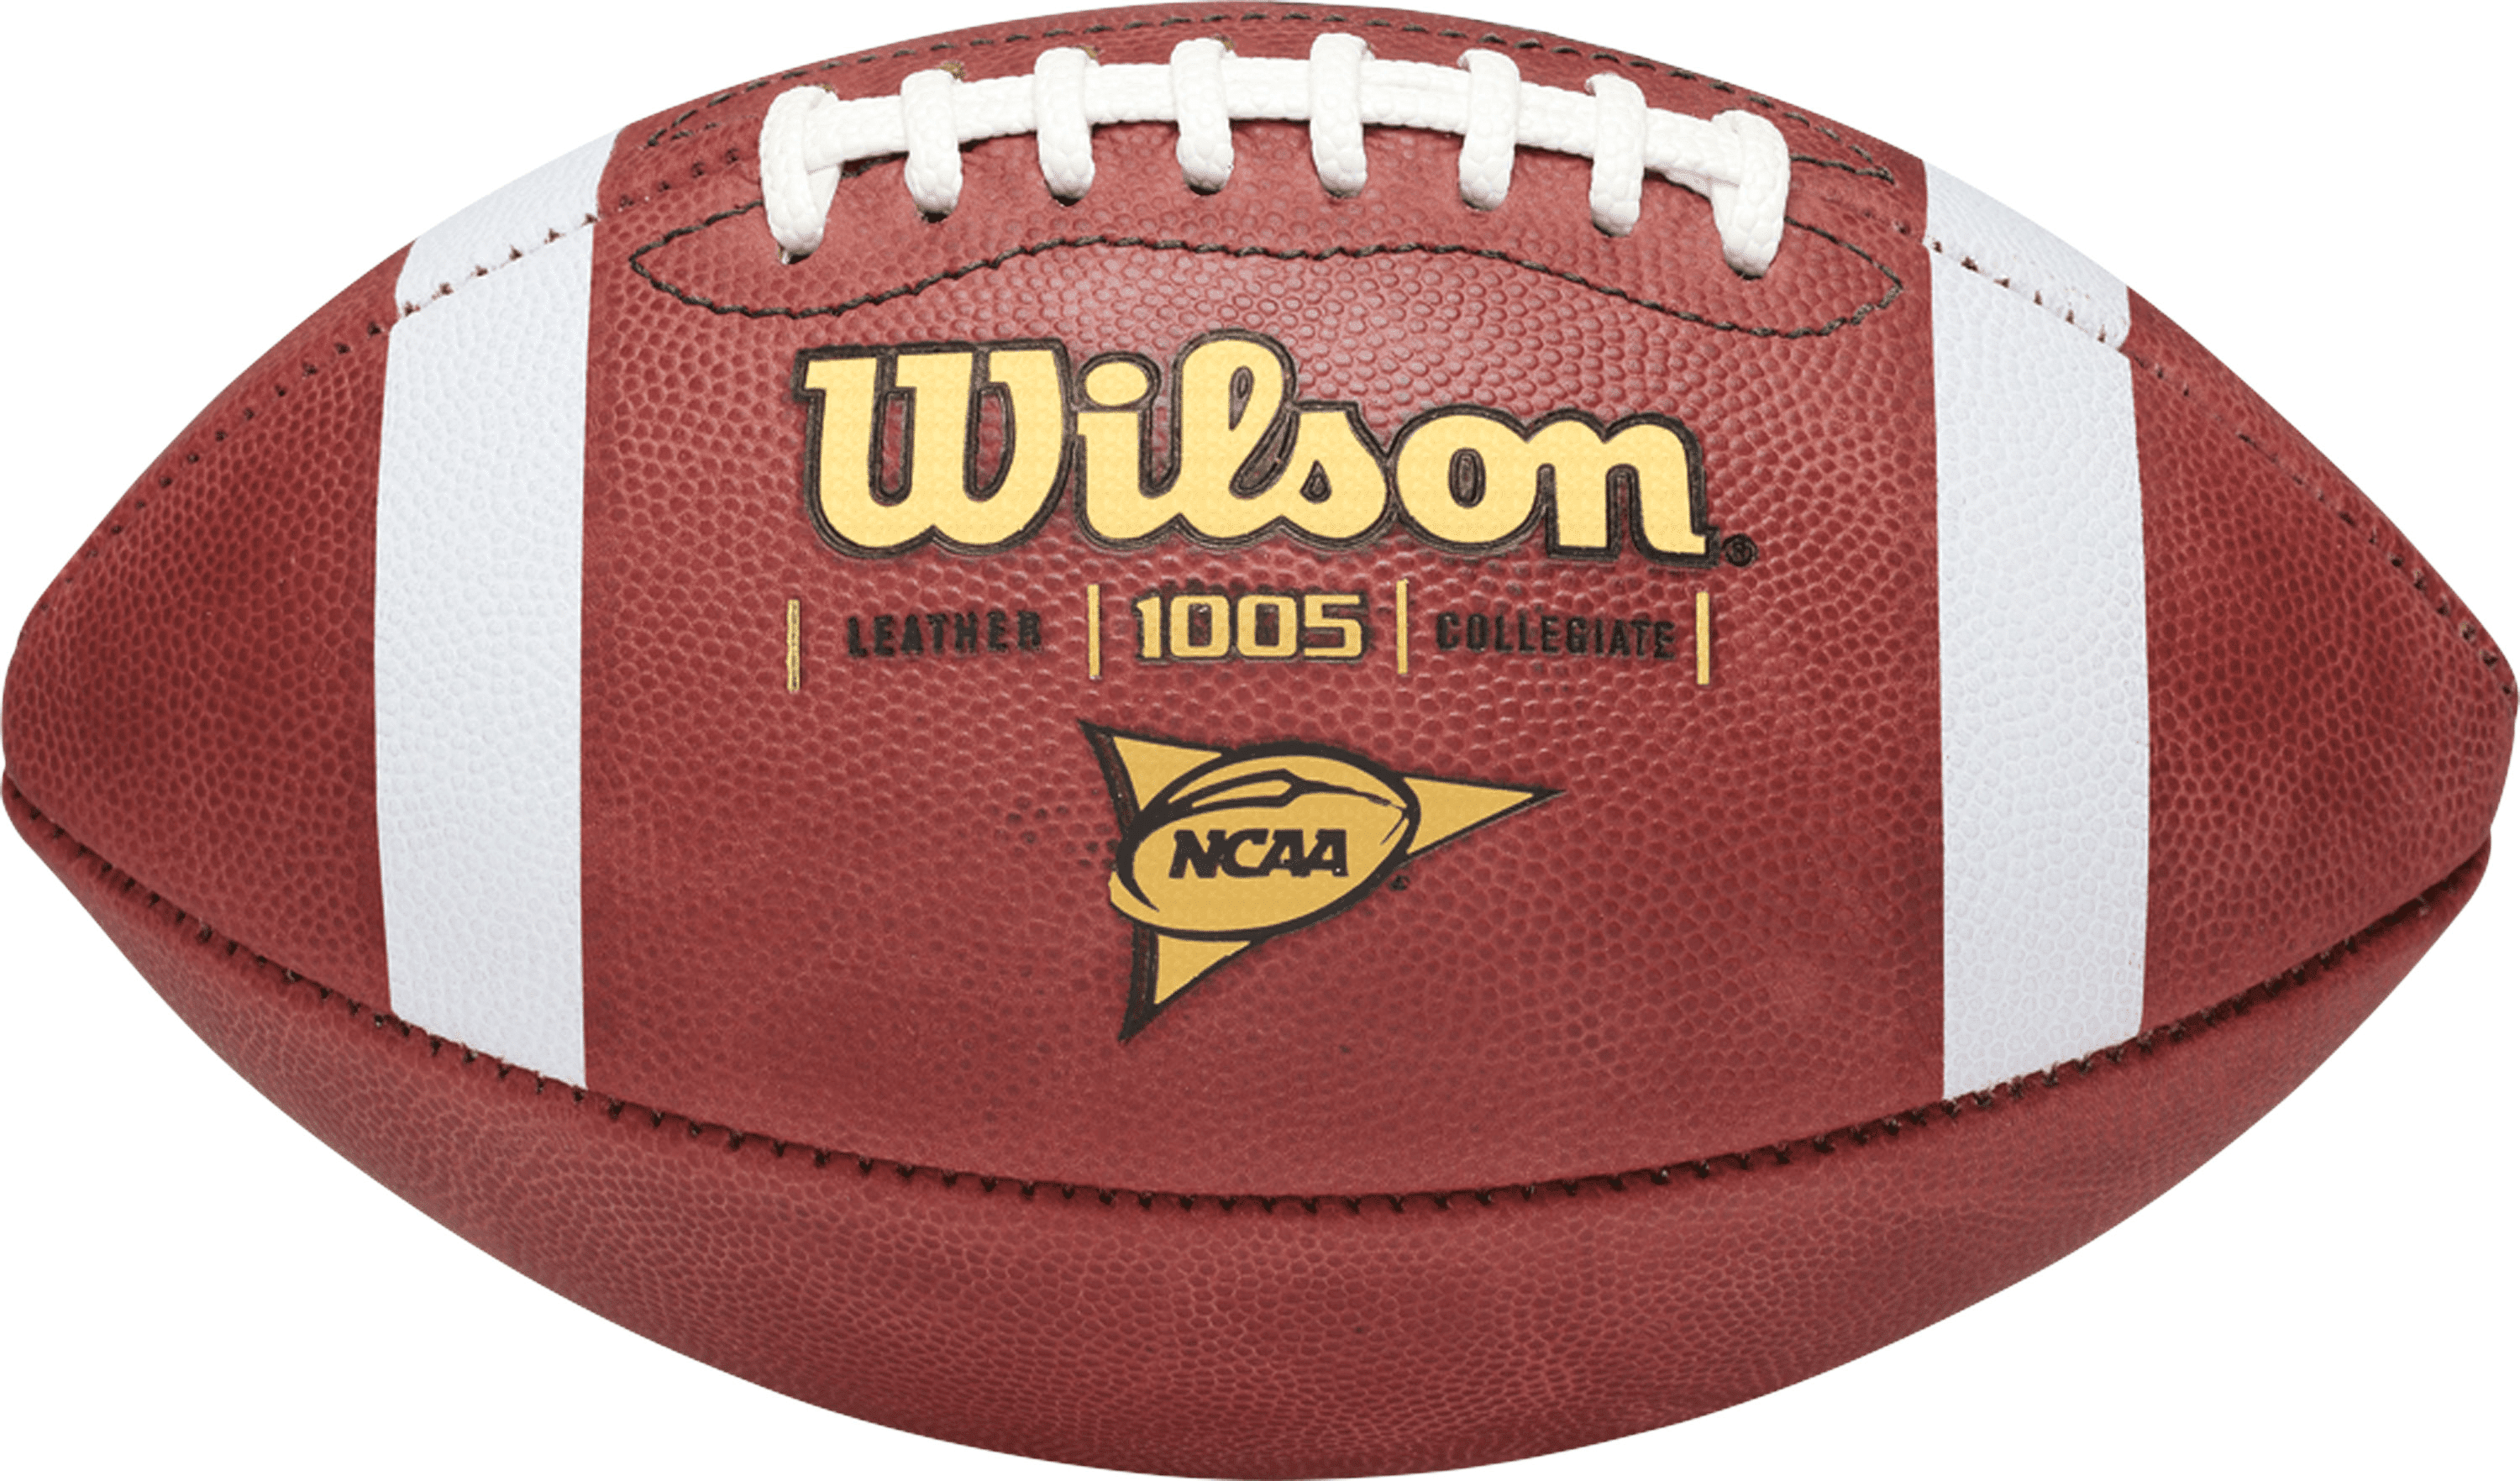 Wilson Adult GST Football 7 Pad Girdle Compression Shorts Sz 2X XXL 3/4Pants NEW 